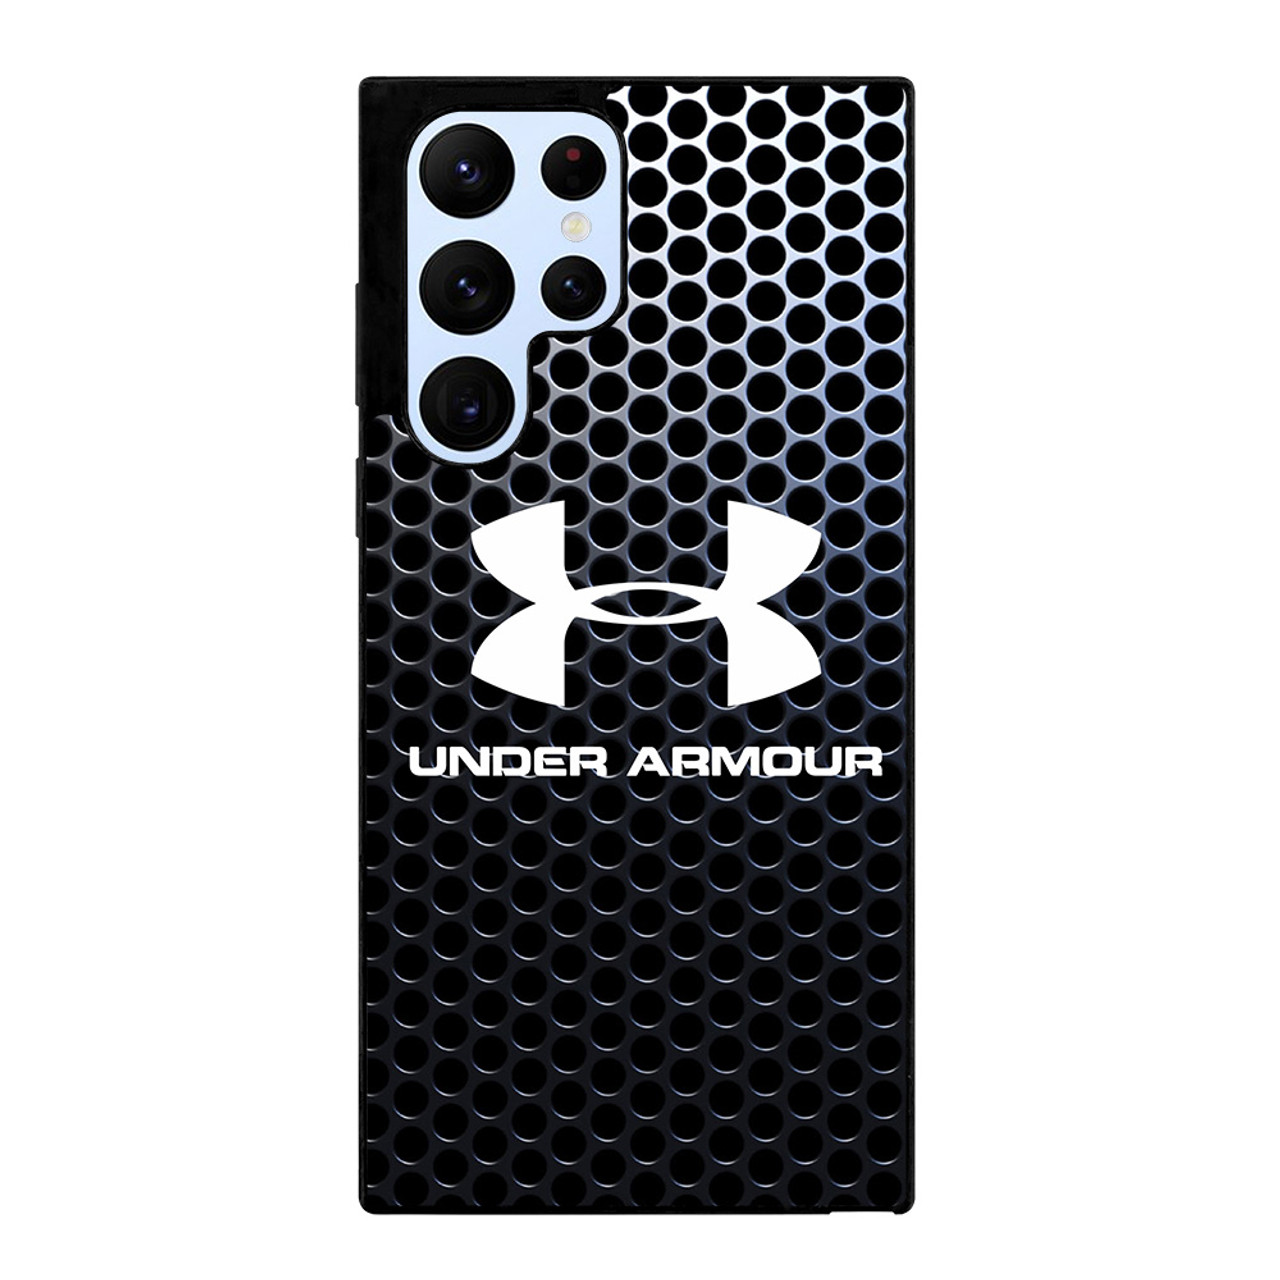 UNDER ARMOUR METAL LOGO Galaxy Ultra Case Cover